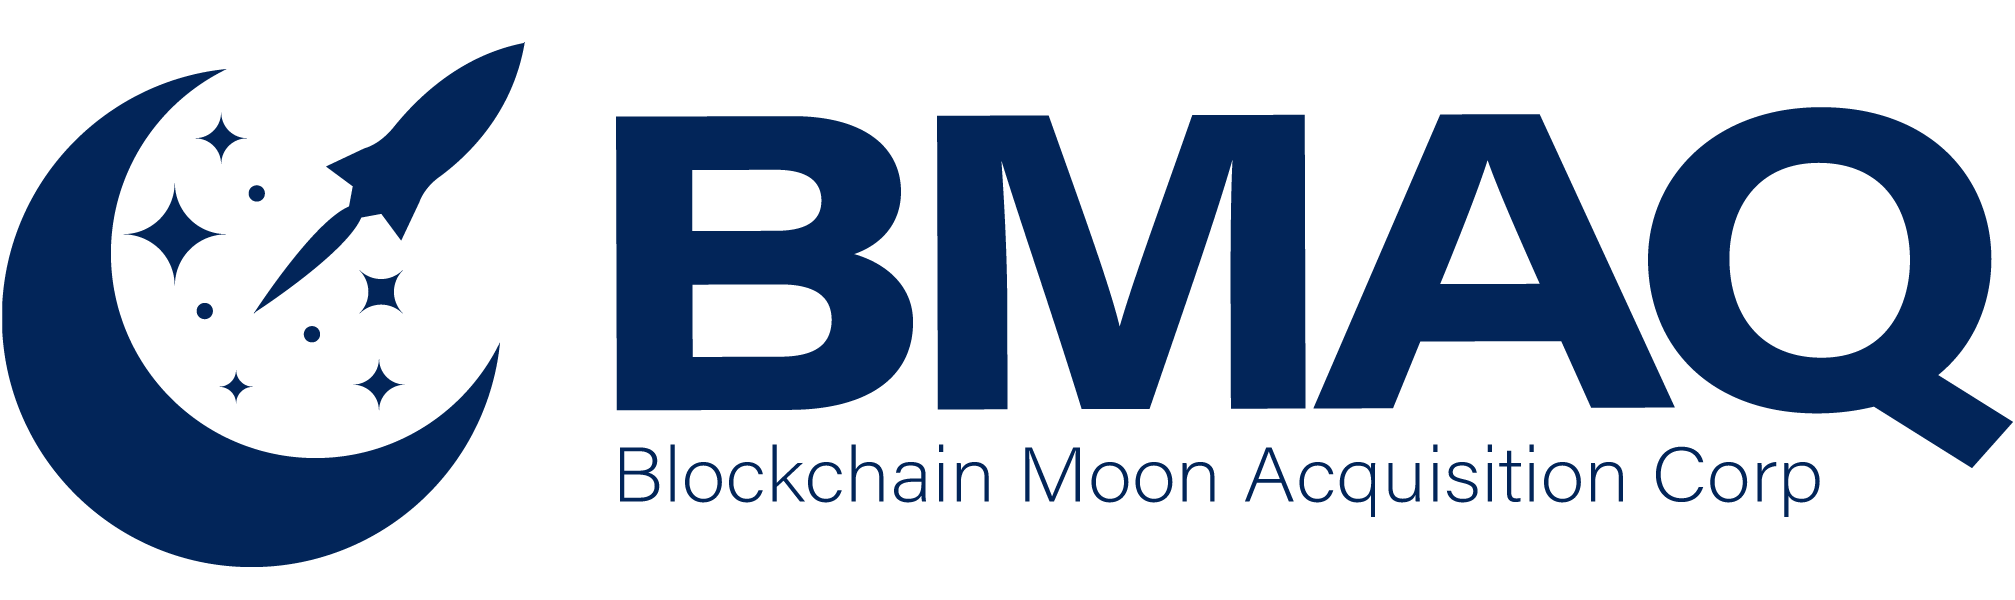 Blockchain Moon Acquisition Corp. Announces Pricing of $100 Million Initial Public Offering 